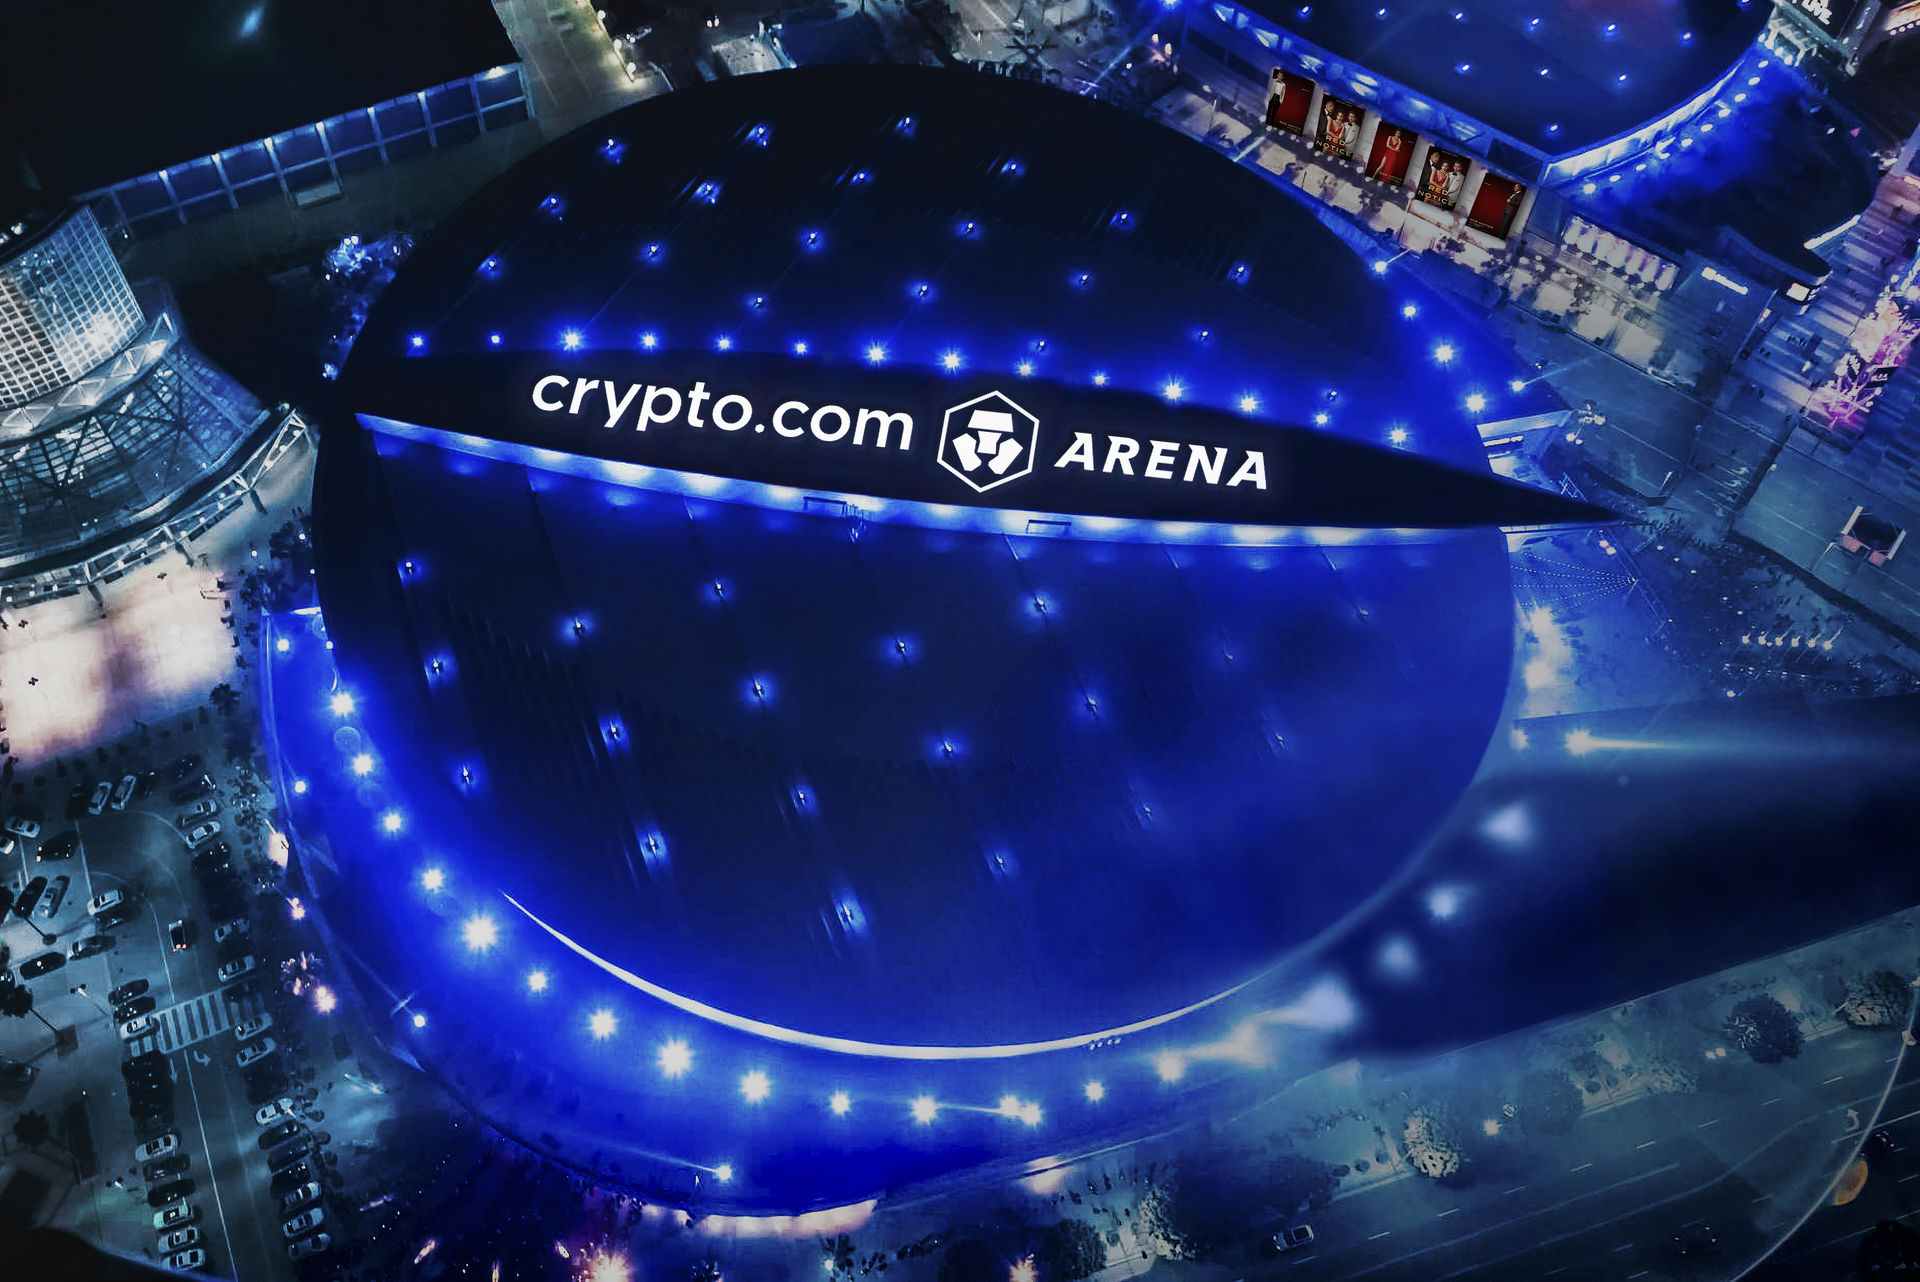 Cryptocom Arena